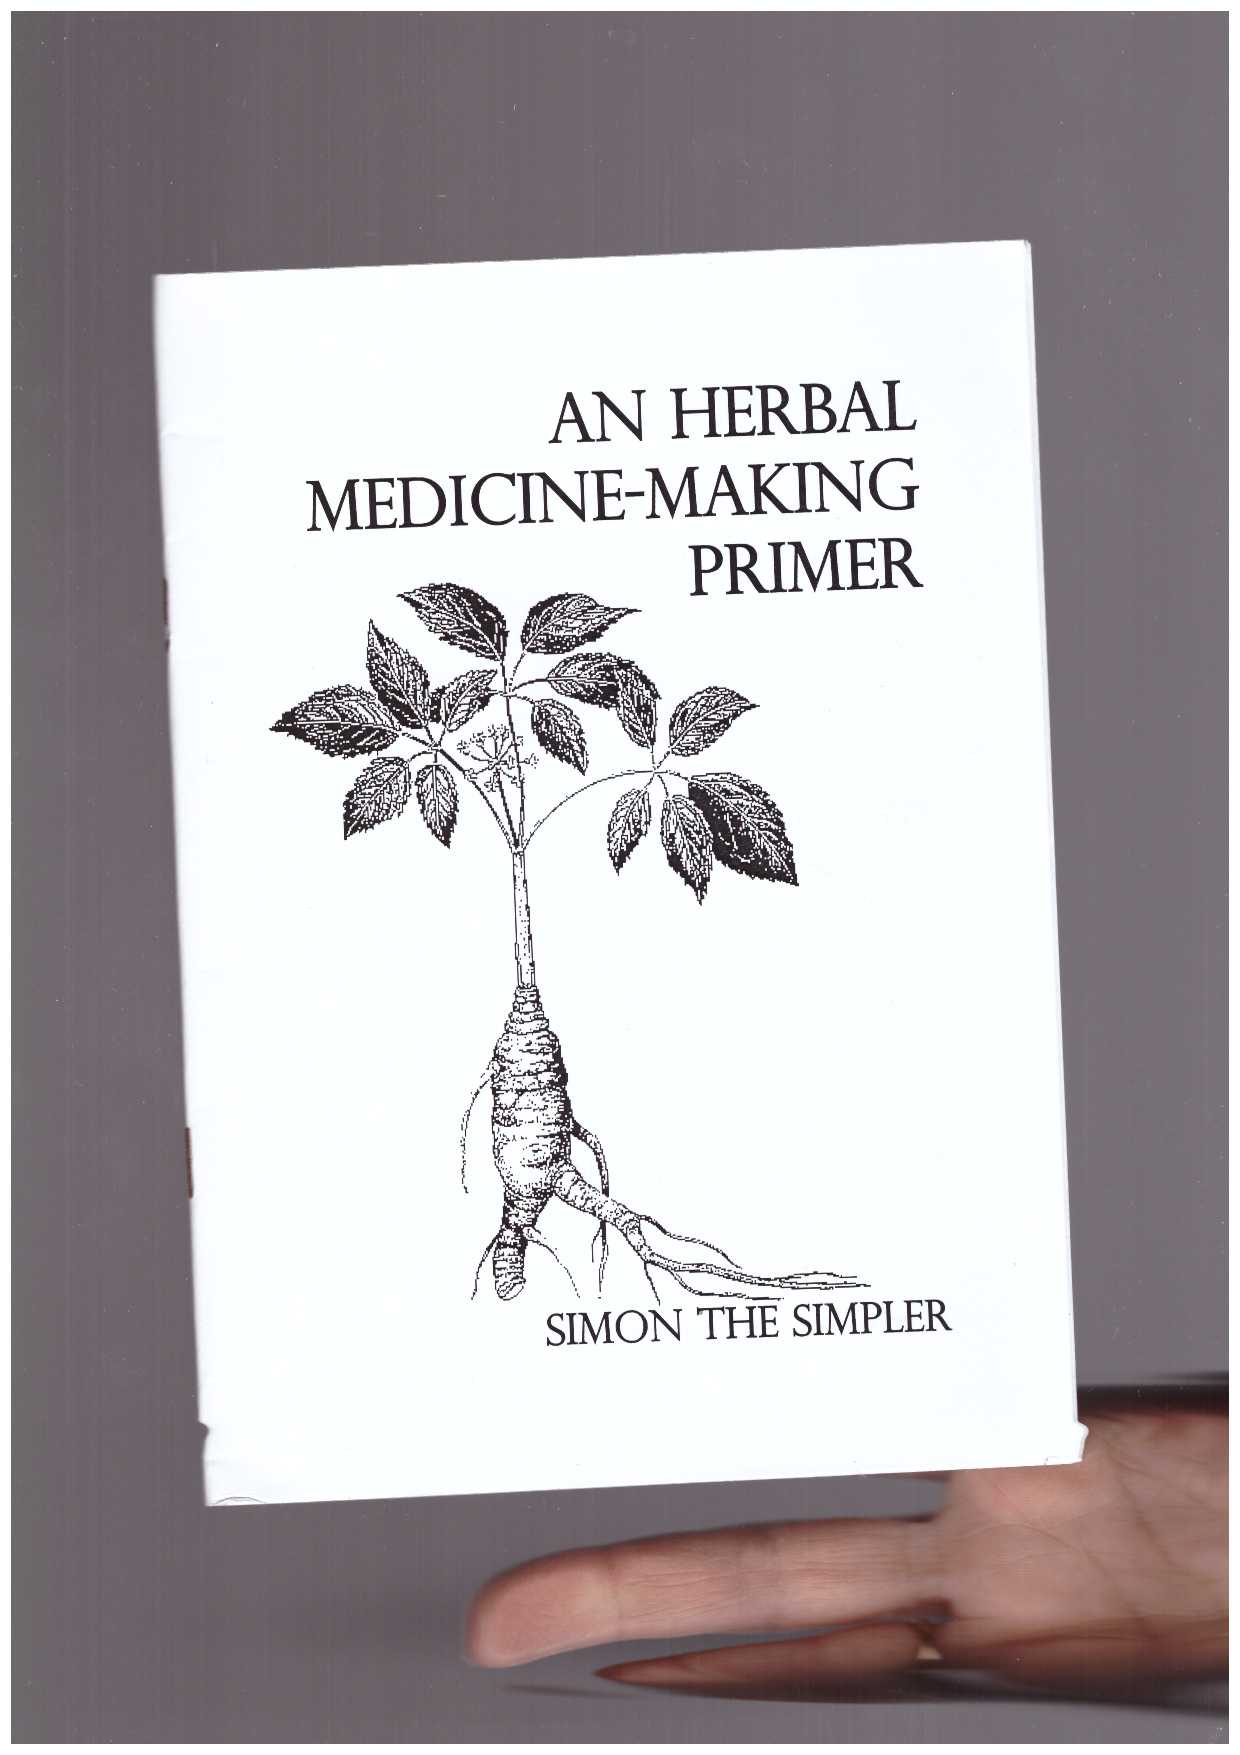 Simon the Simpler - An Herbal Medicine-Making Primer